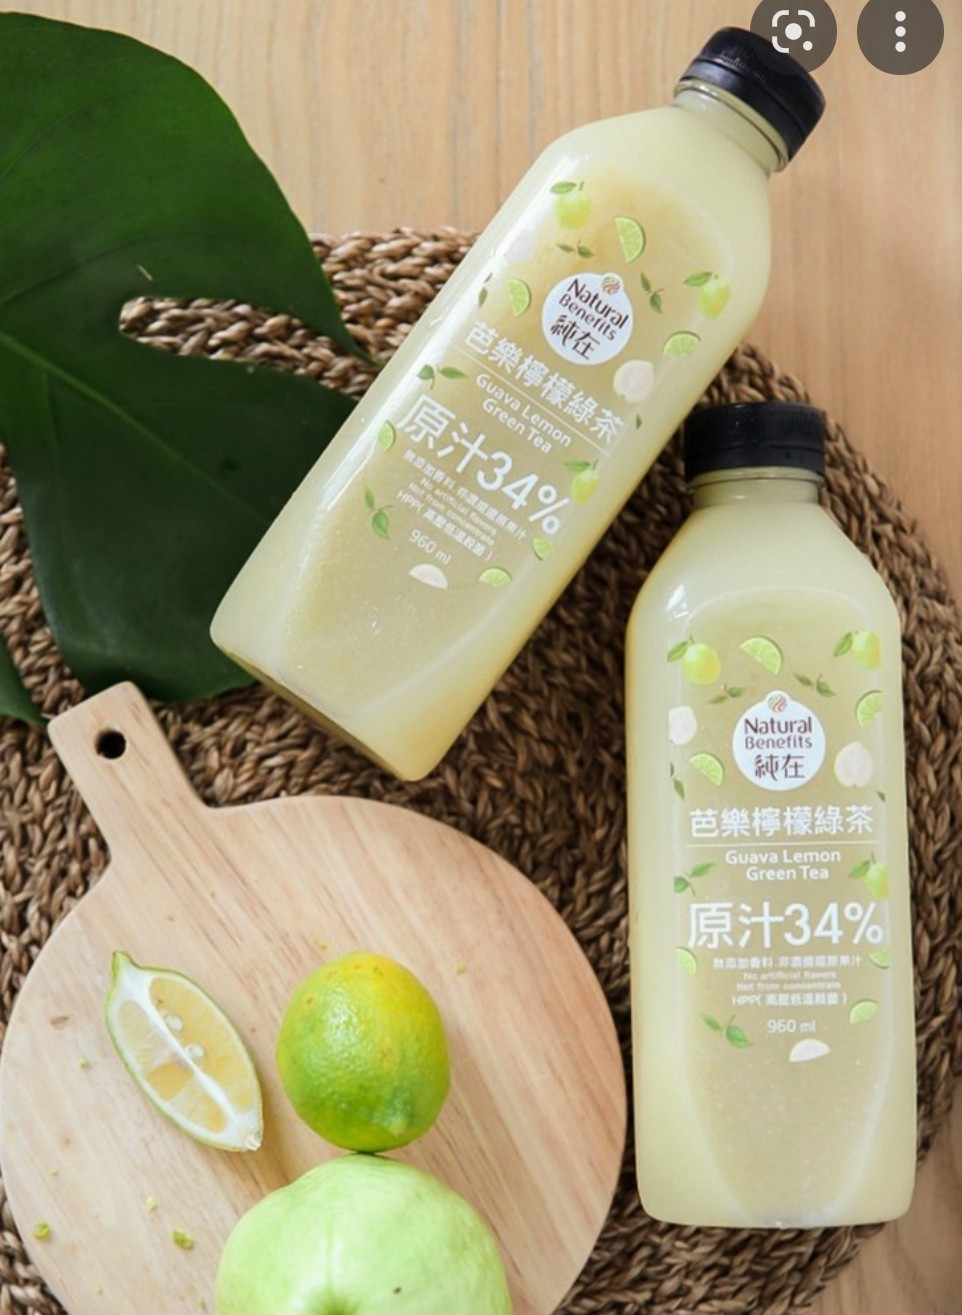 natural-benefits-guava-lemon-green-tea